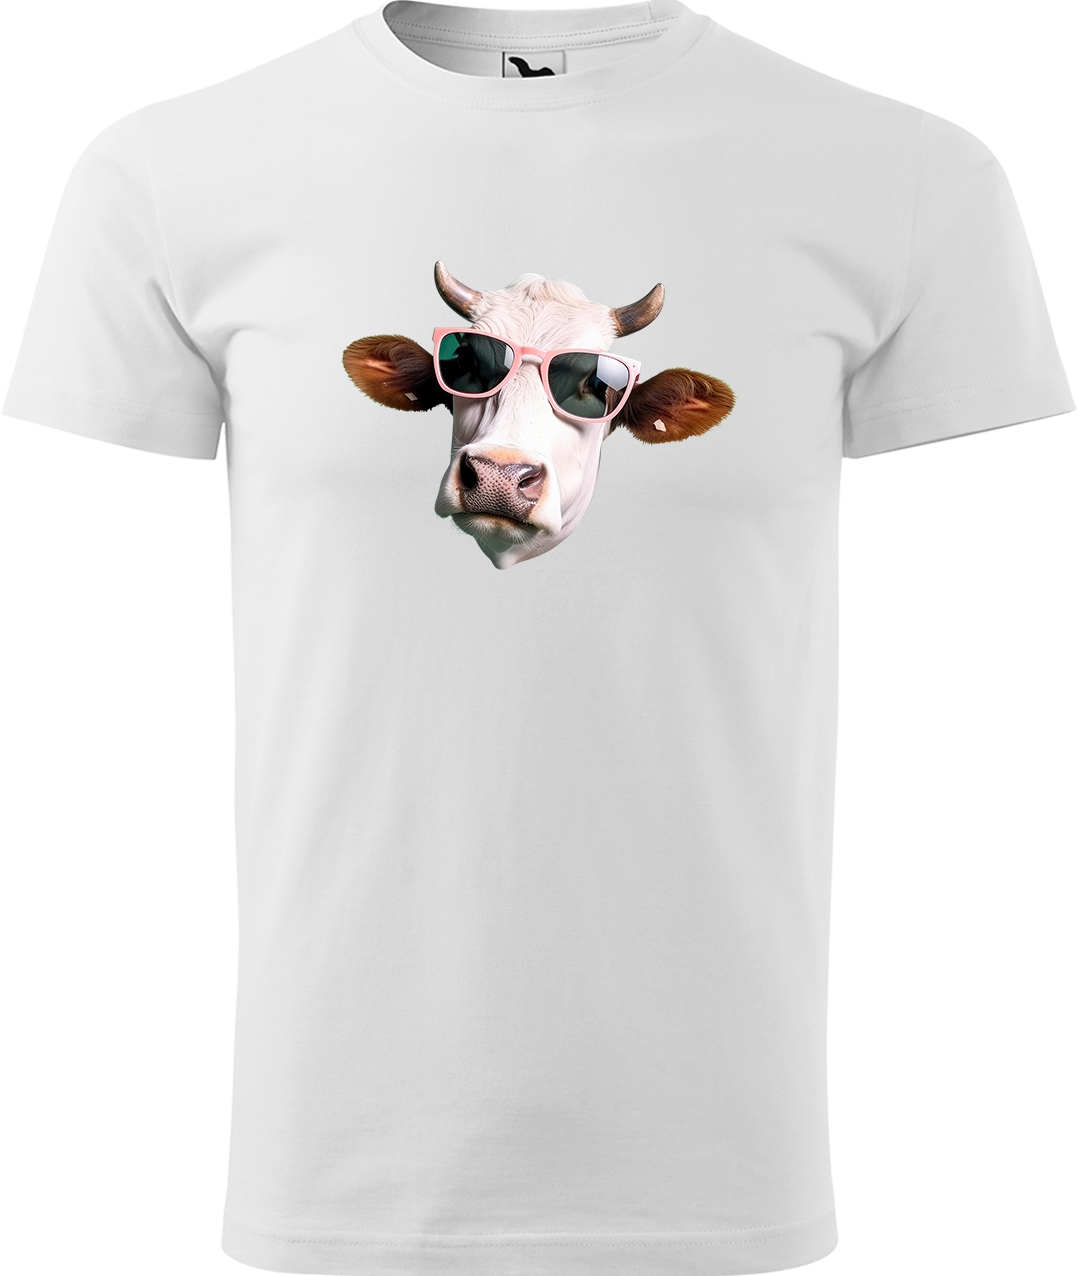 Pánské tričko s krávou - Kráva v brýlích Velikost: S, Barva: Bílá (00), Střih: pánský